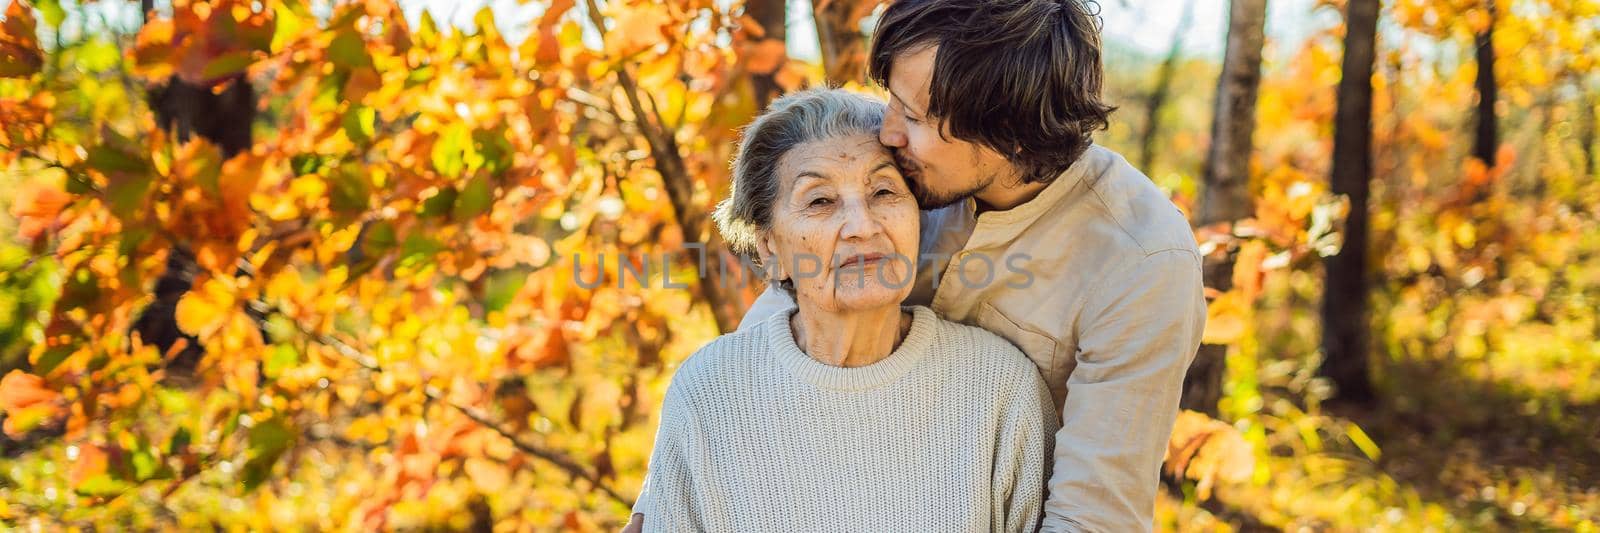 Grandmother and adult grandson hugging in autumn park BANNER, LONG FORMAT by galitskaya